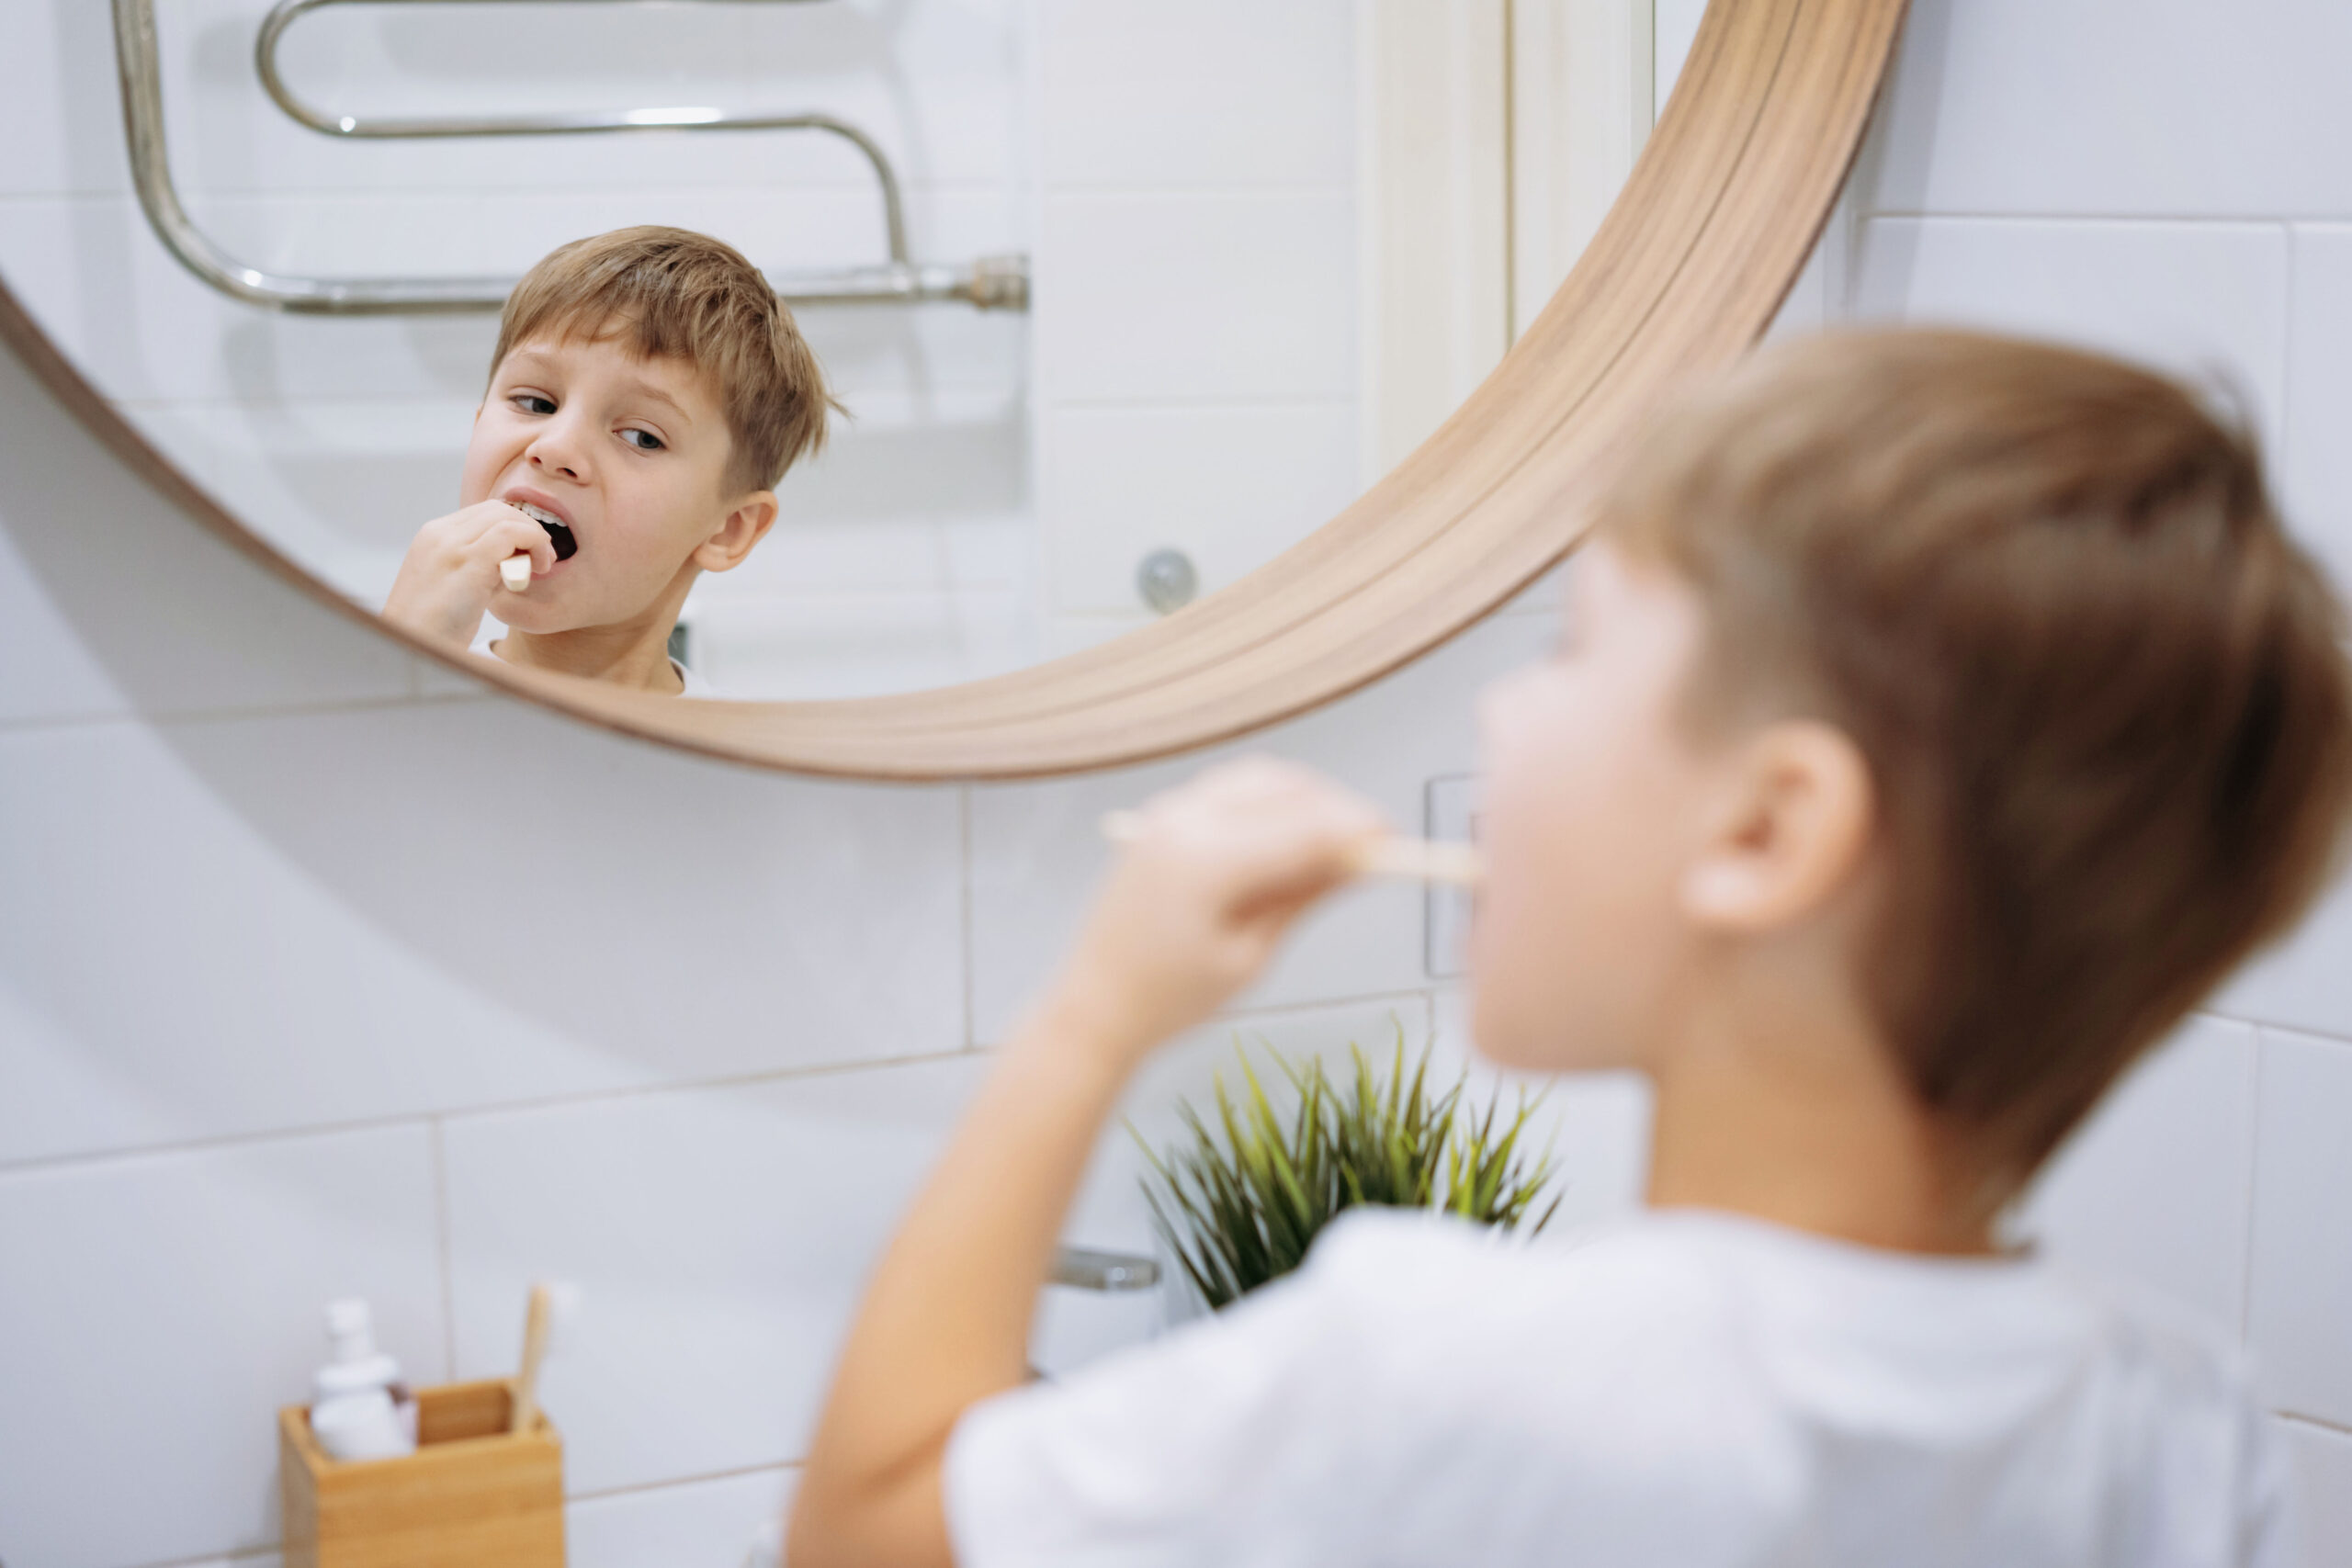 boy brushing teeth with bamboo tooth brush in bathroom looking into mirror